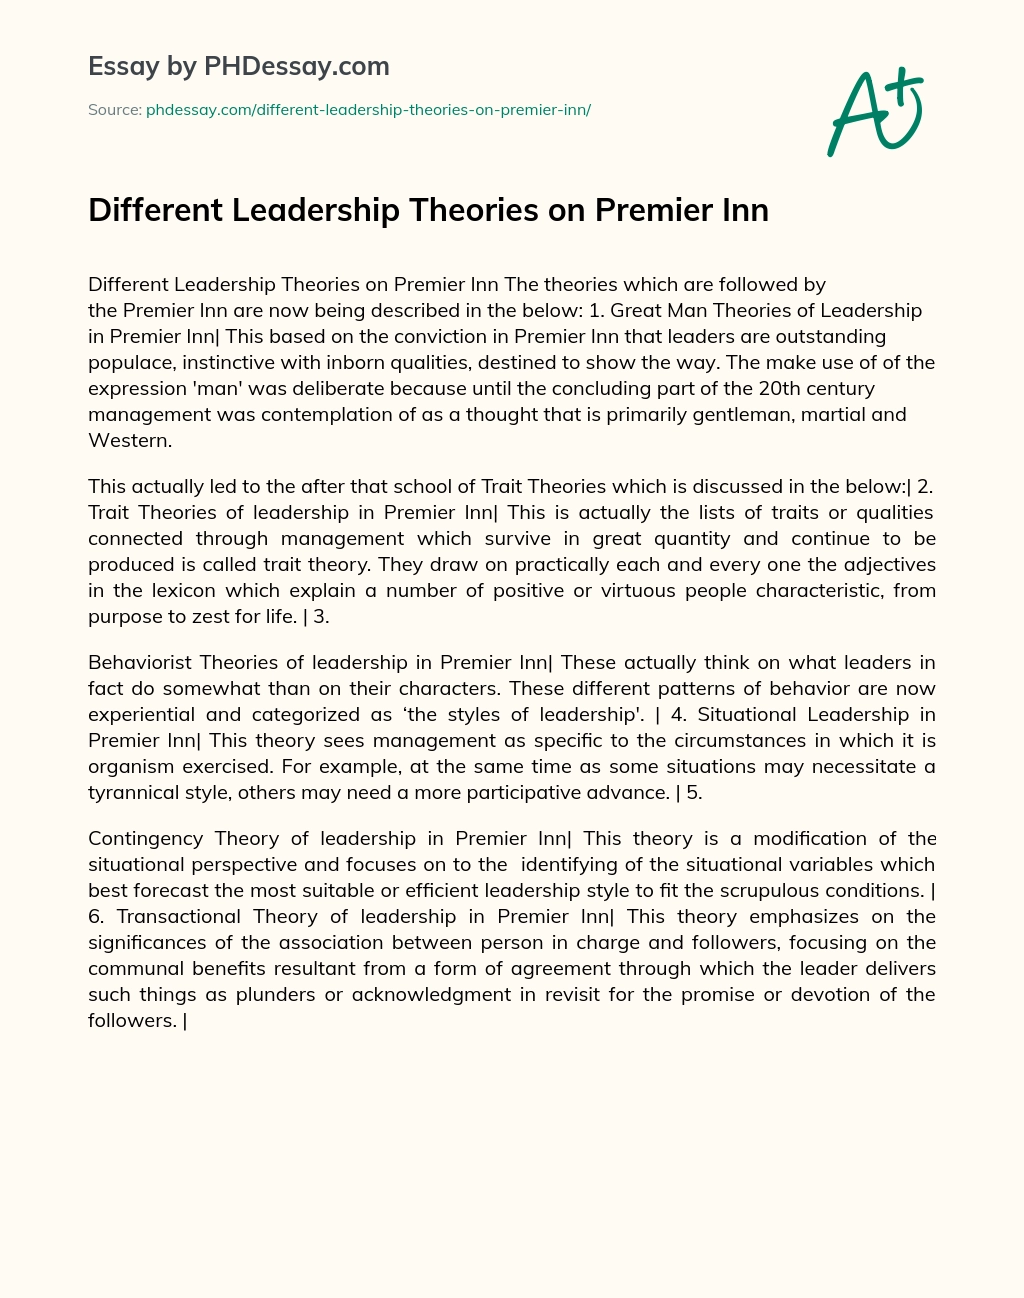 Different Leadership Theories on Premier Inn essay